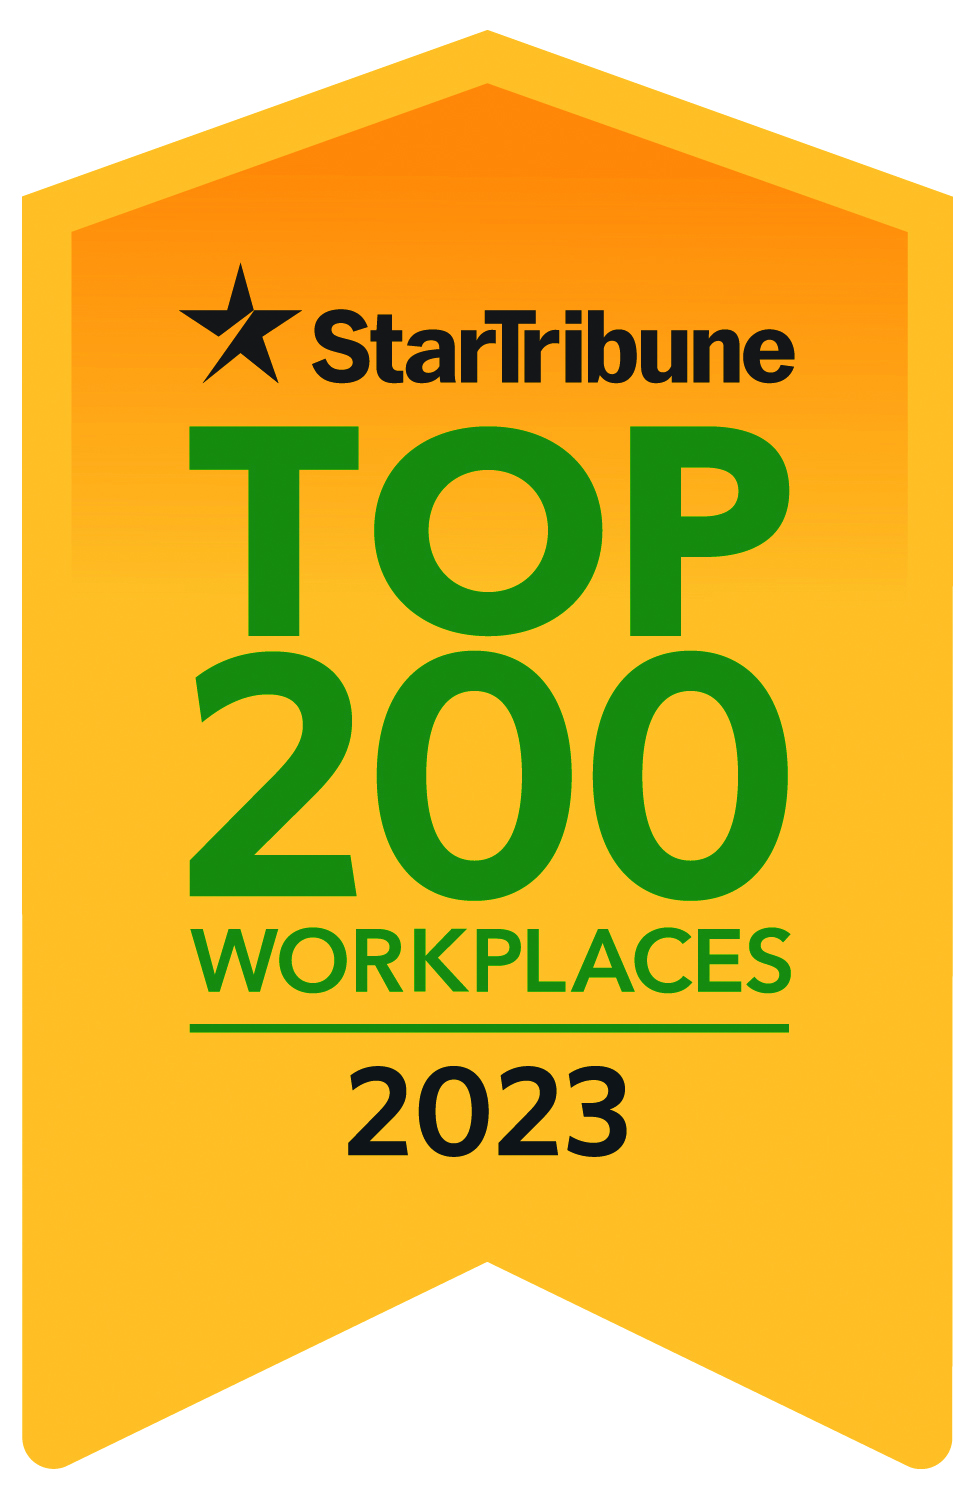 StarTribune Top 200 Workplaces 2023 logo